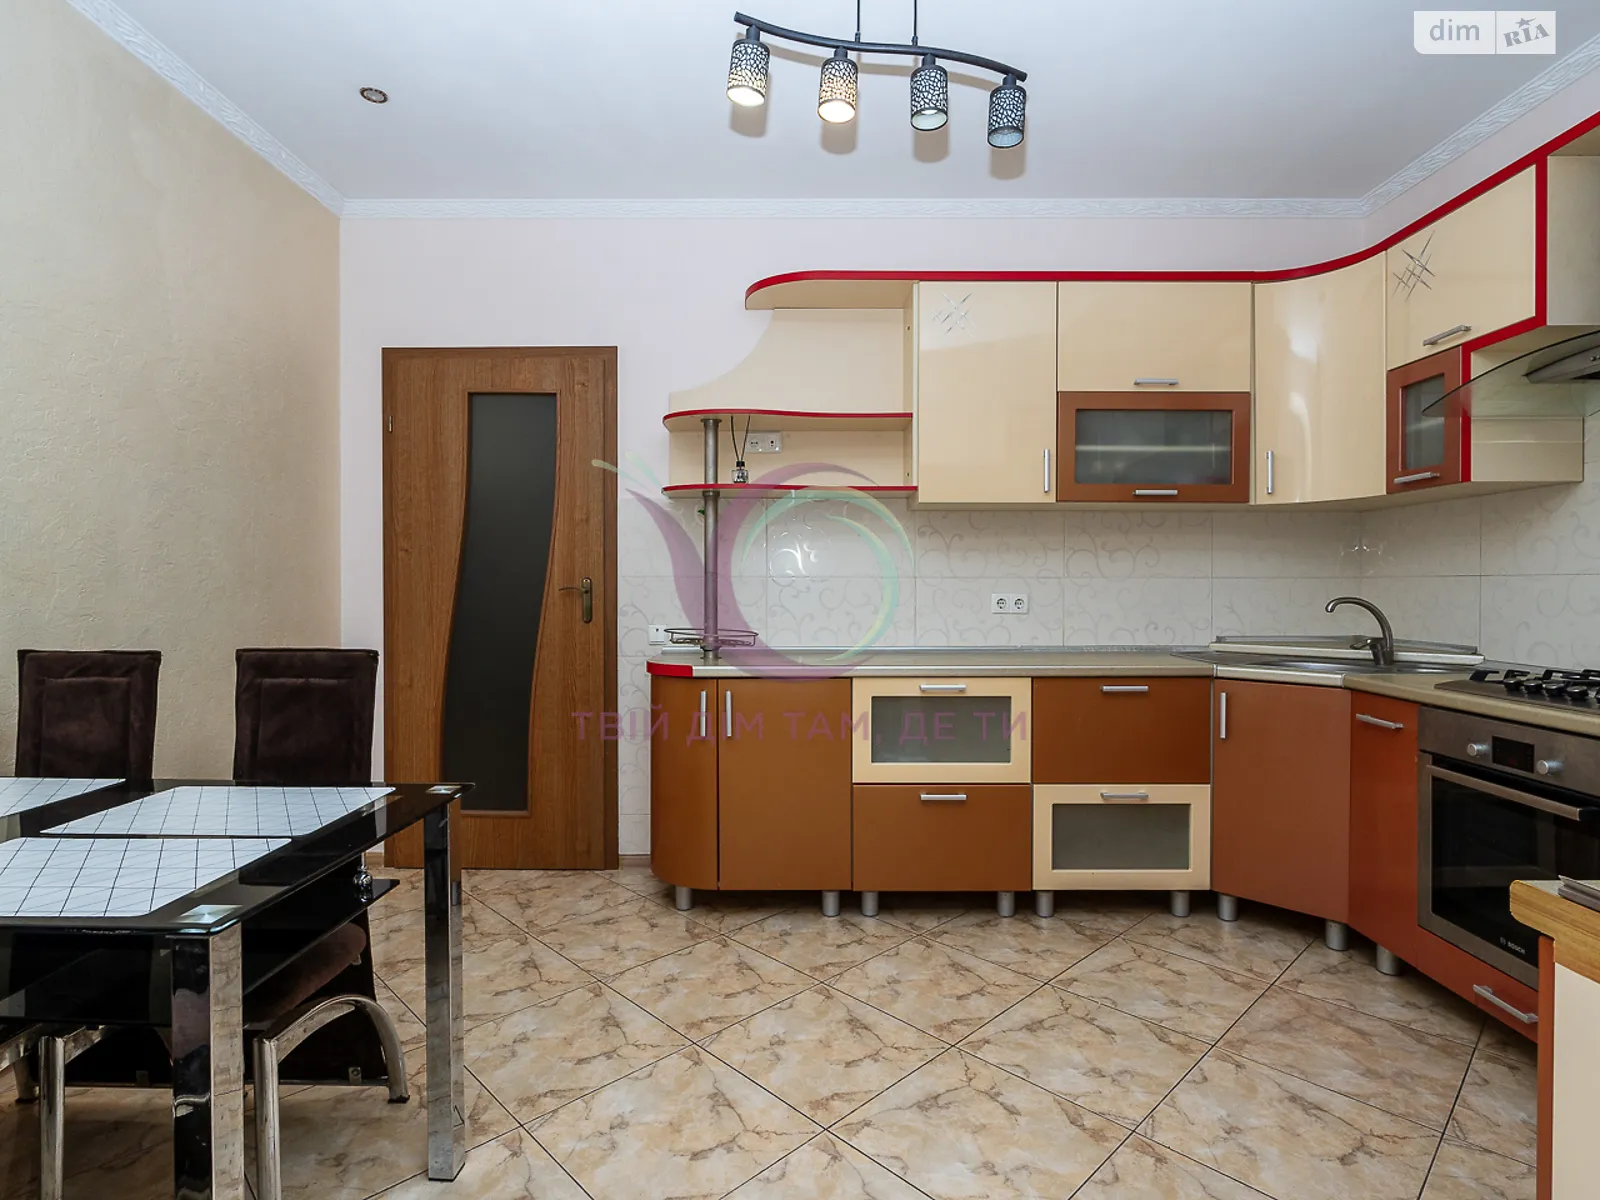 Сдается в аренду 3-комнатная квартира 90 кв. м в Ивано-Франковске - фото 2